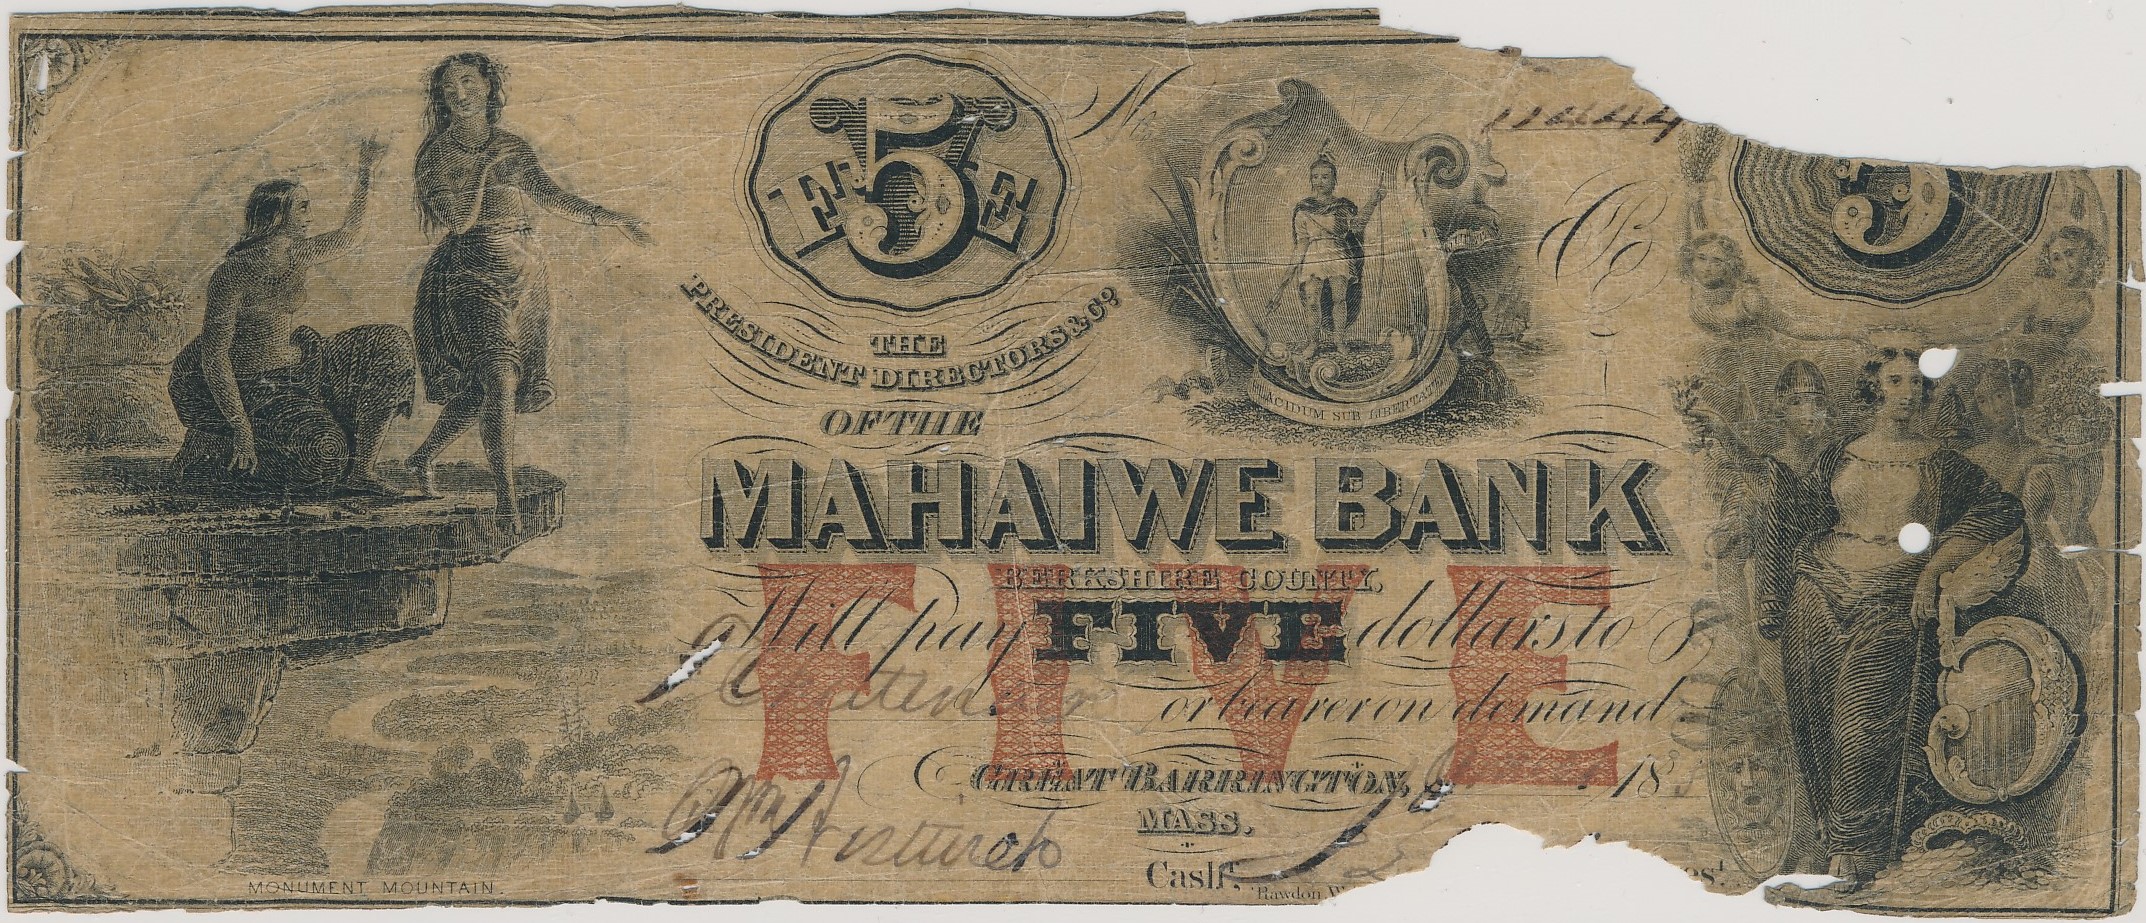 $5 John A. Mathews (on Mahaiwe Bank)